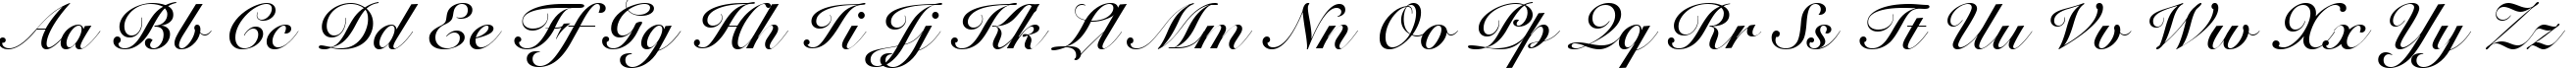 Пример написания английского алфавита шрифтом Snell Bold BT